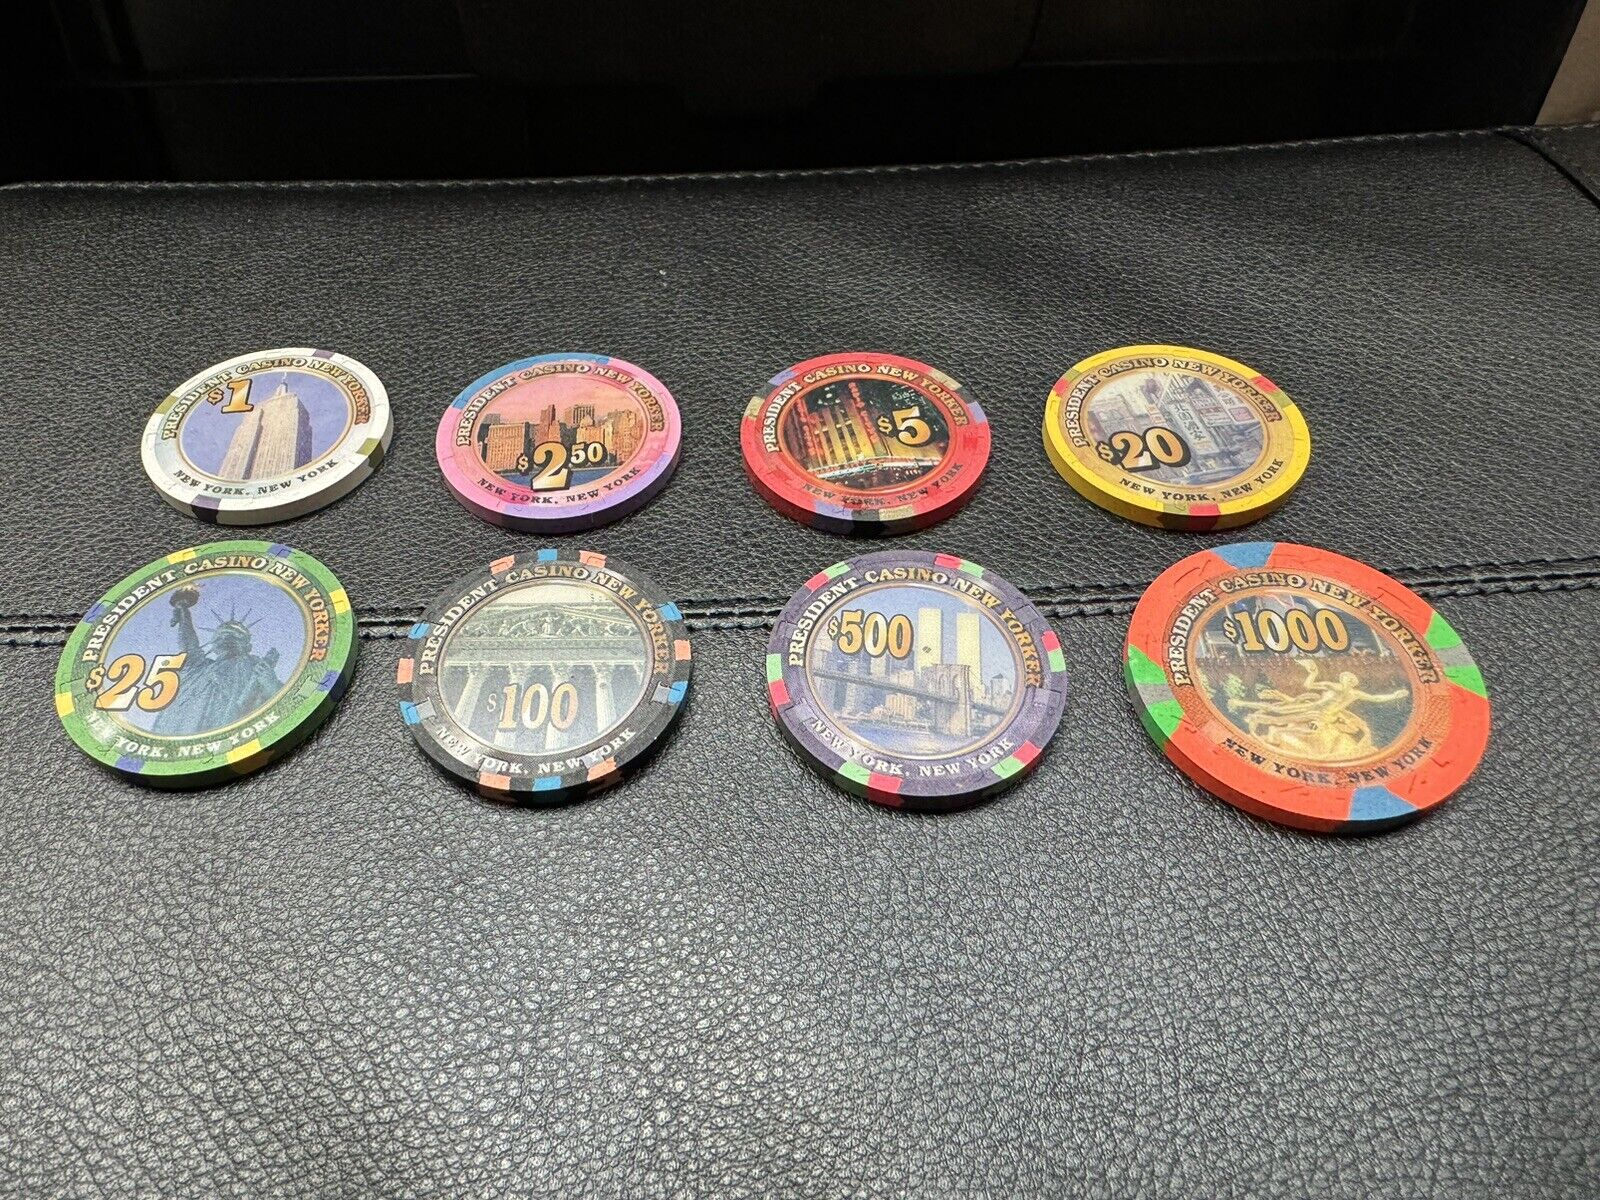 Paulson President Casino New Yorker Poker Chips